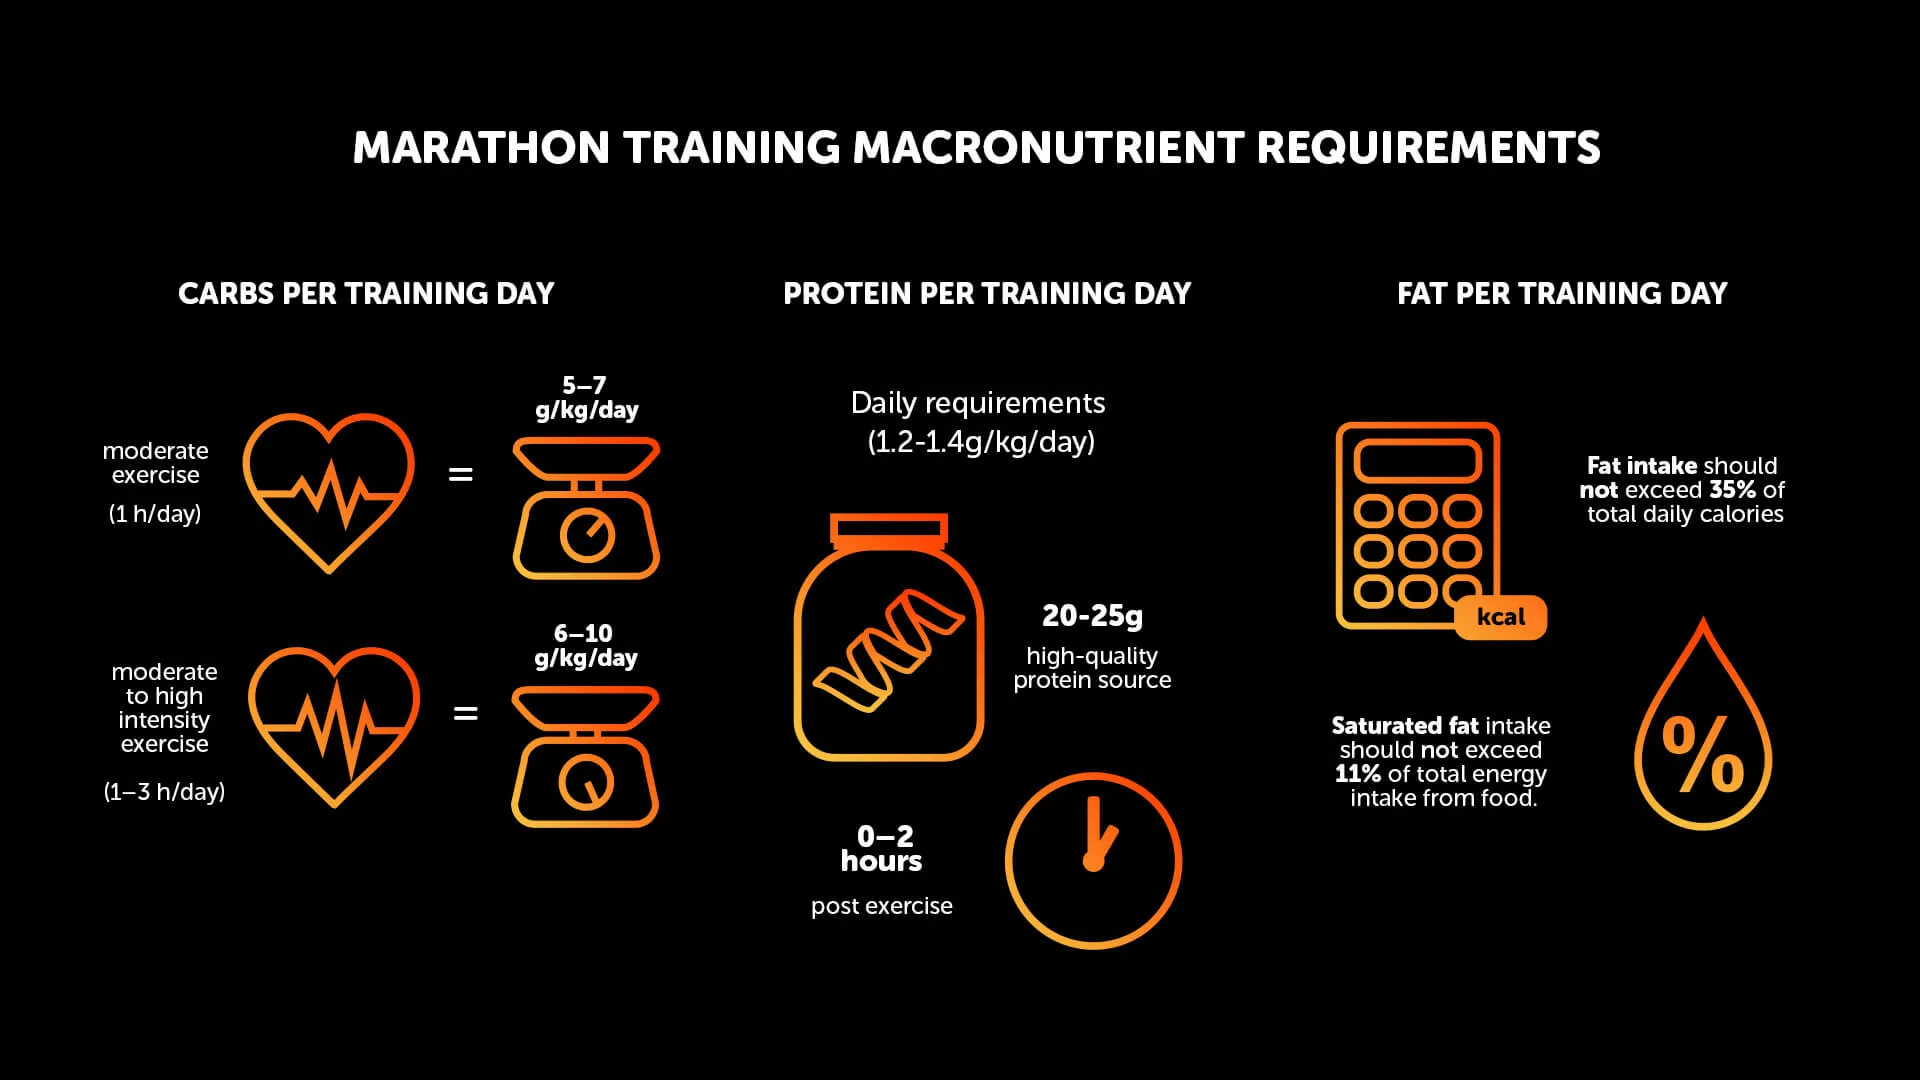 marathon training macronutrient requirements infographic